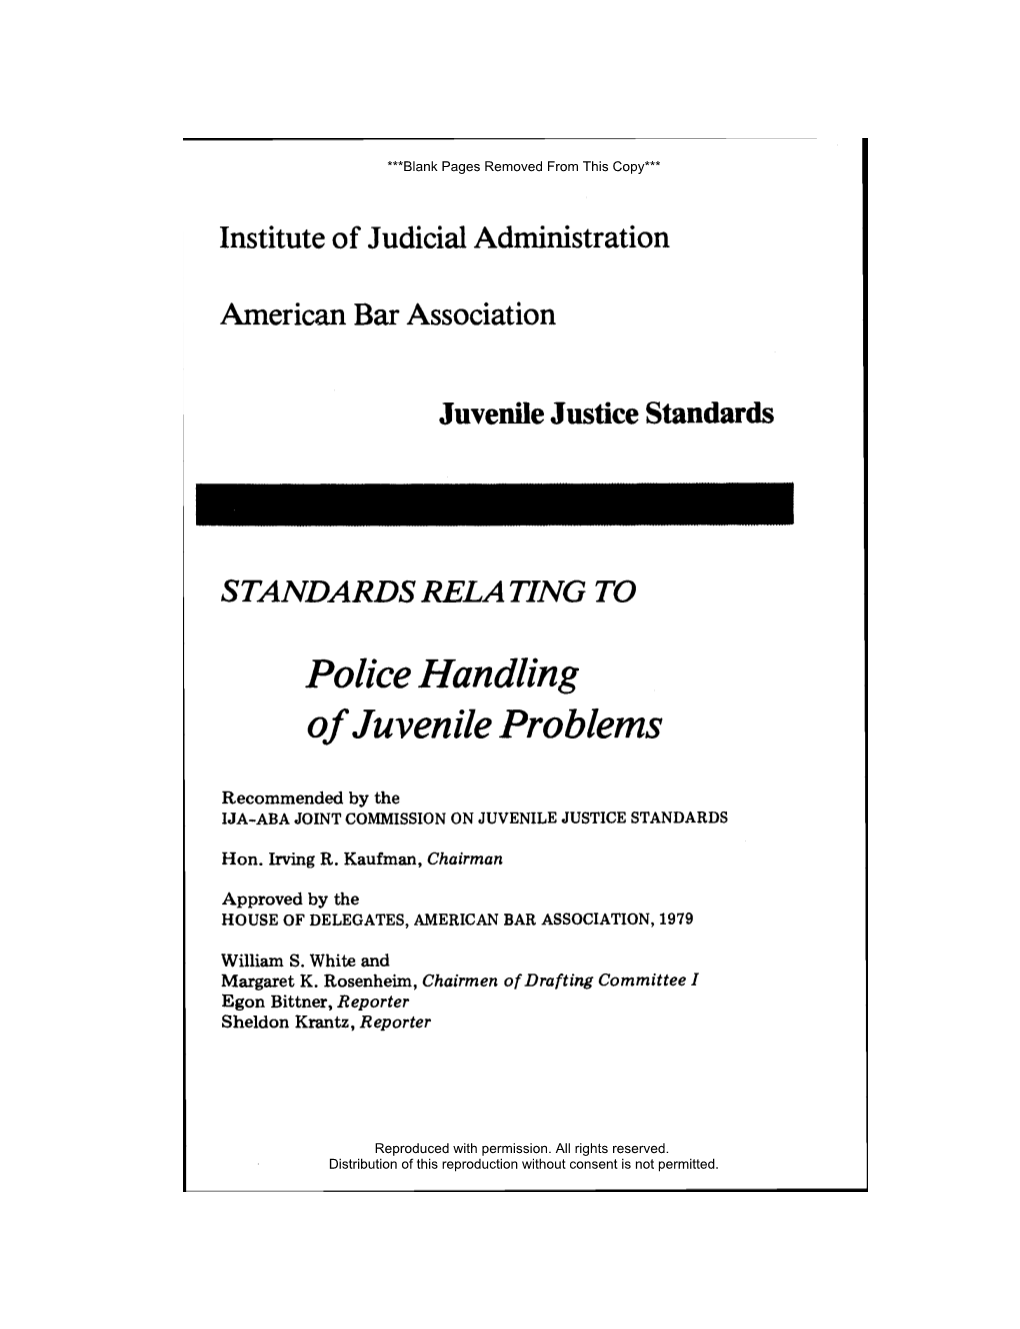 Standards Relating to Police Handling of Juvenile Problems